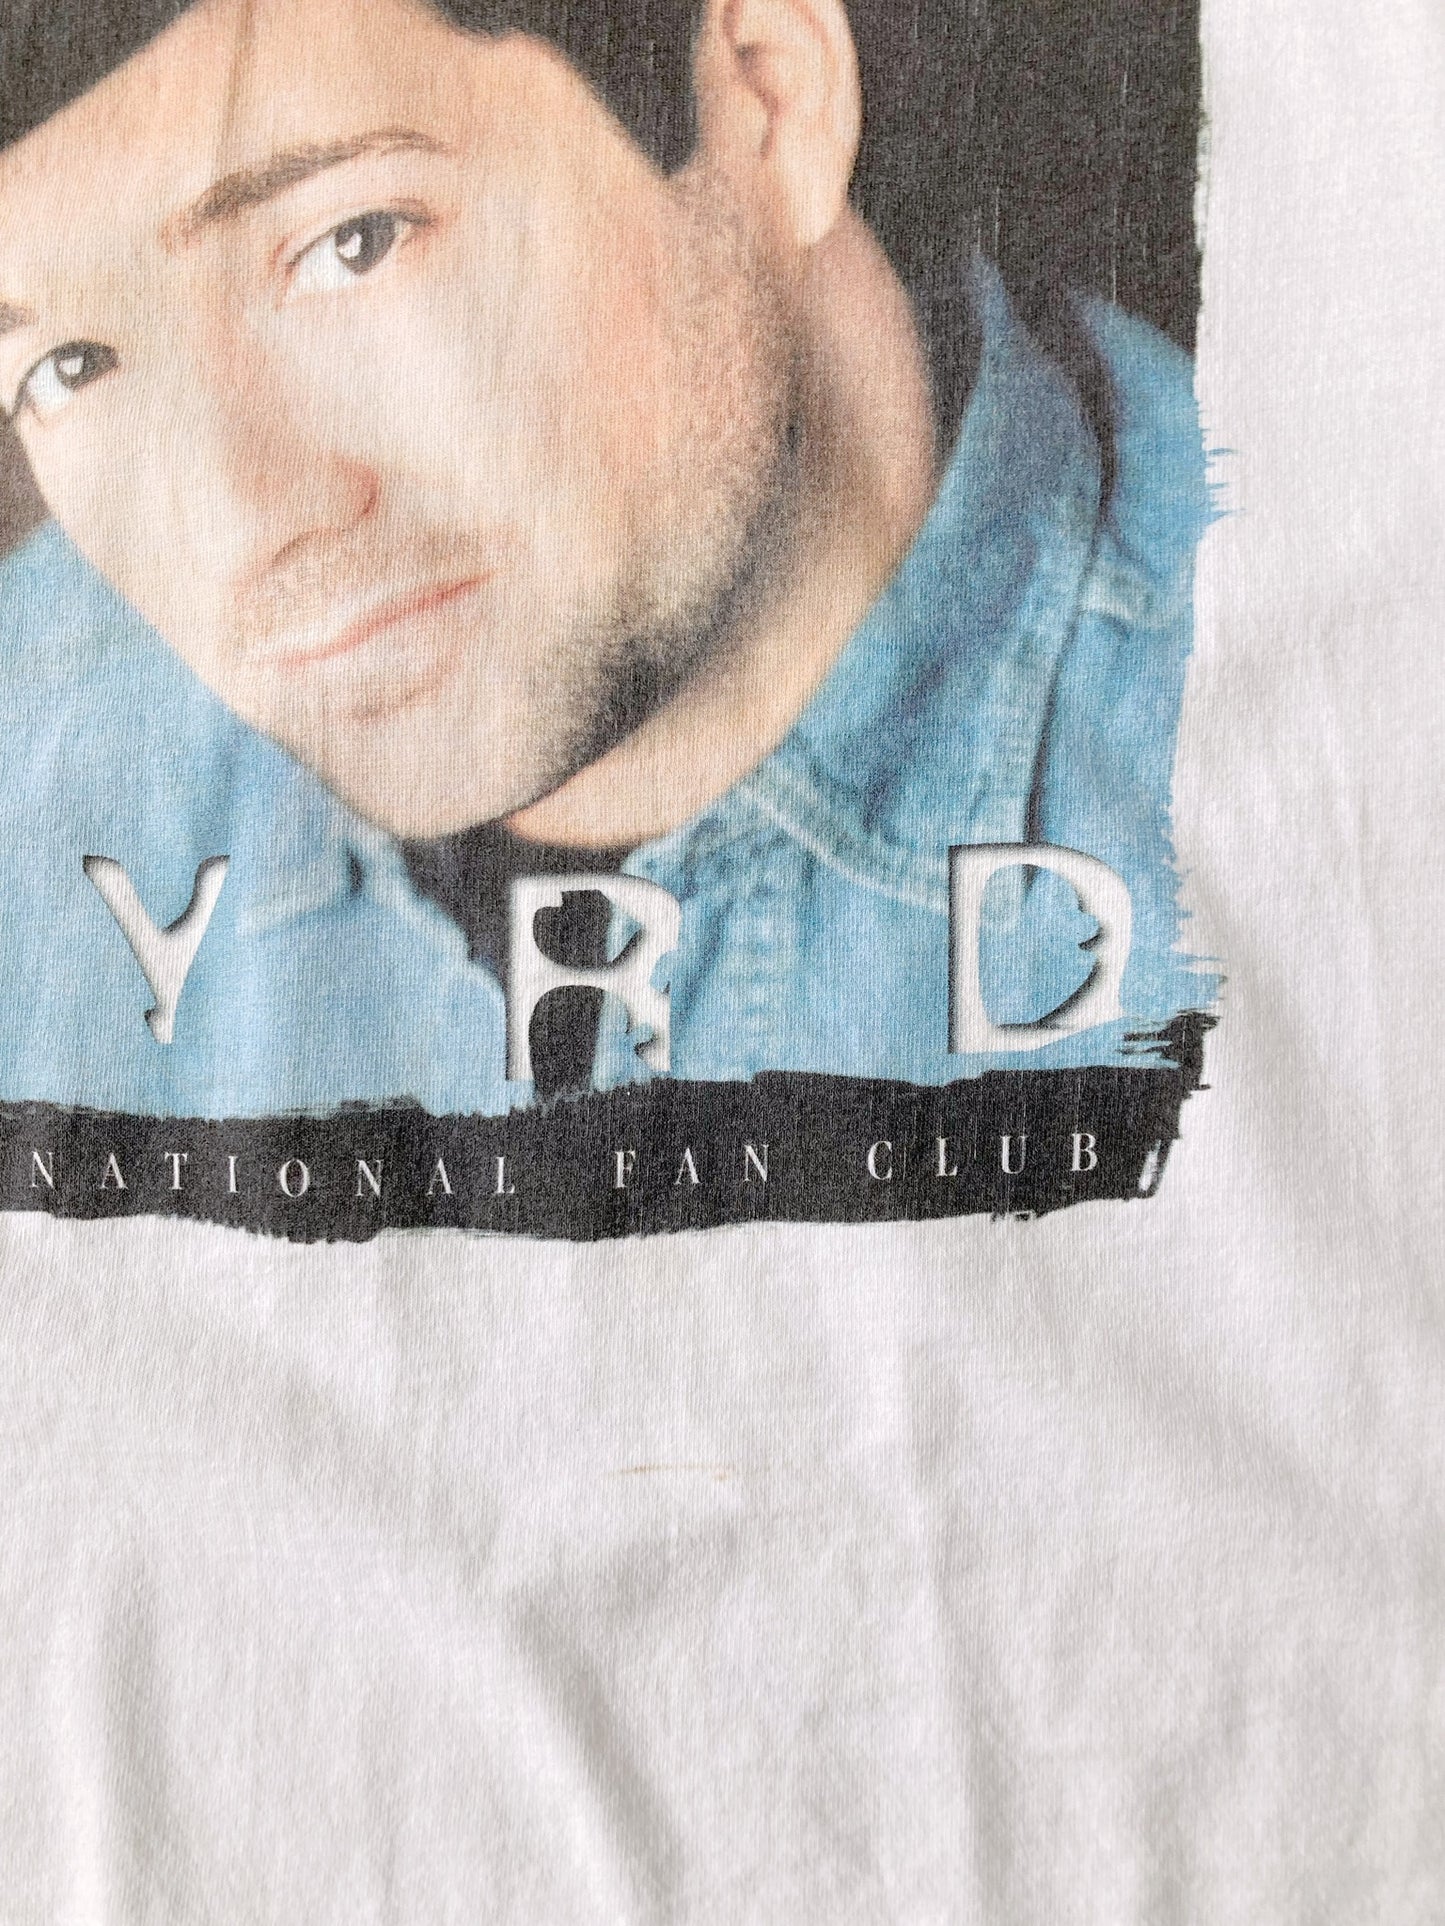 Tracy Byrd T-Shirt 90's - XL